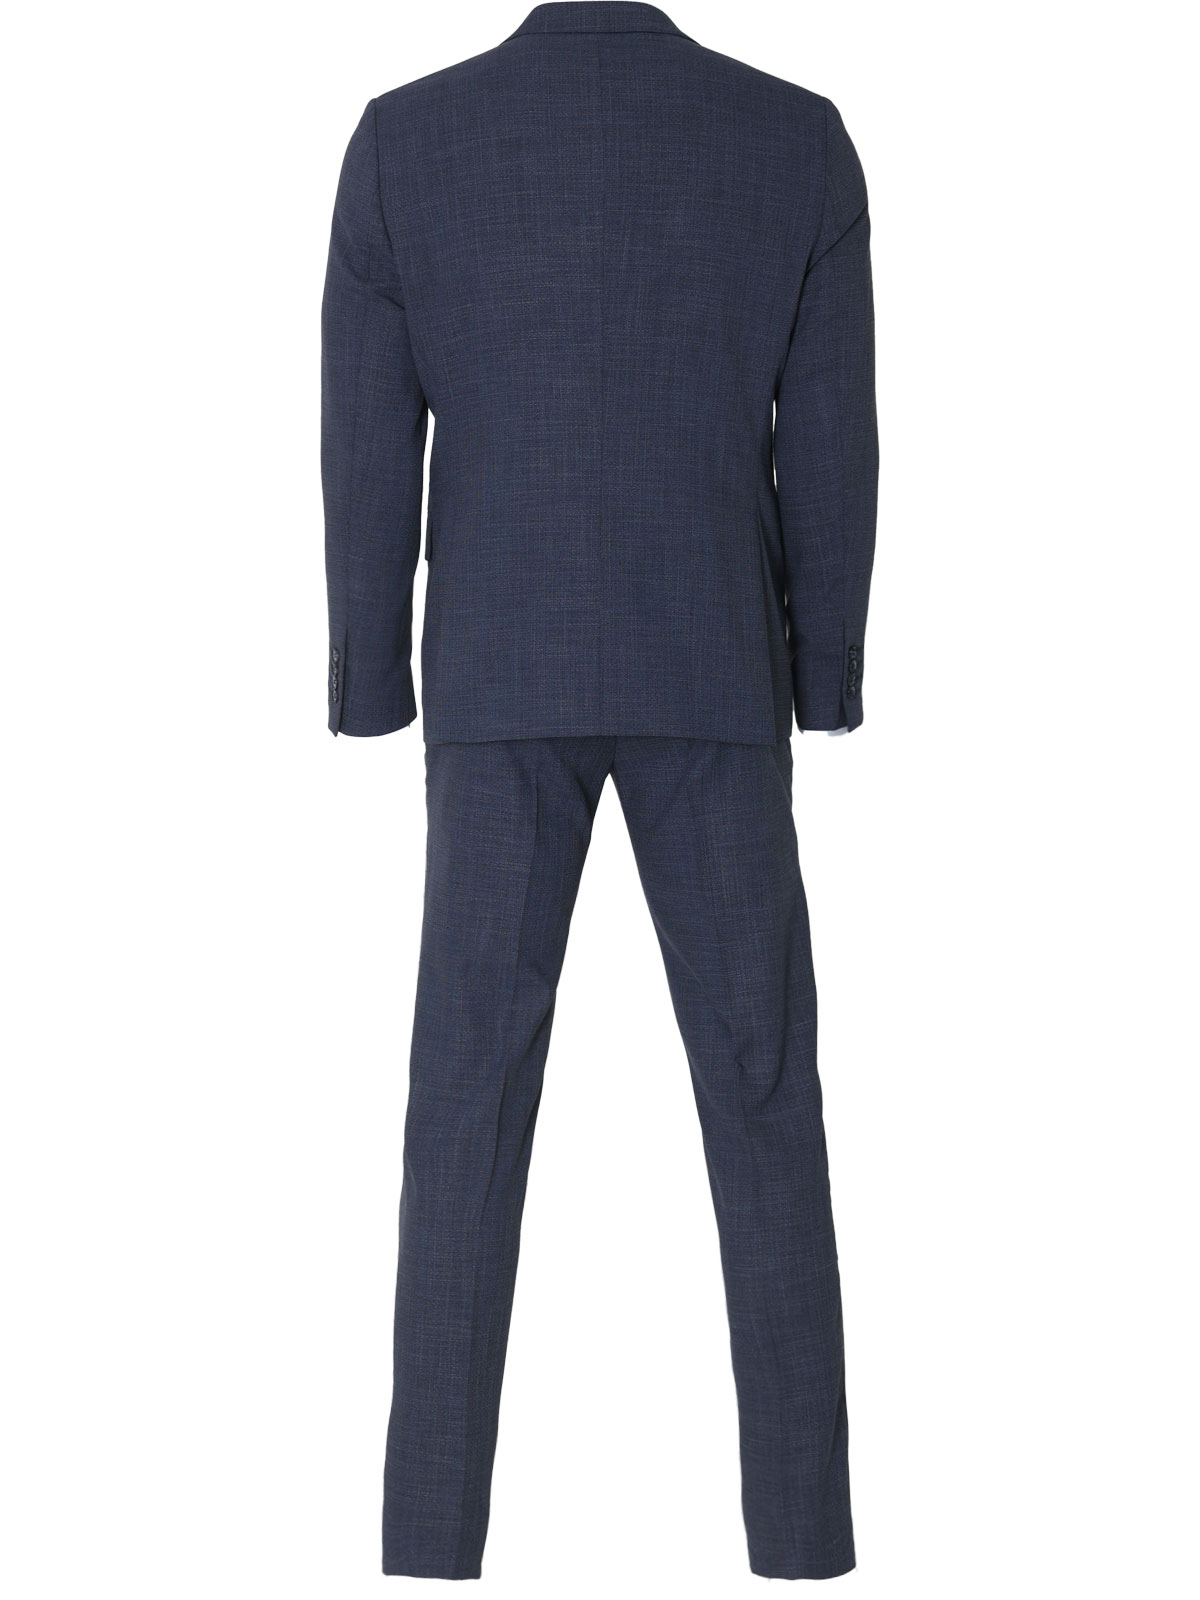 3piece suit in blue melange - 68072 € 241.84 img2